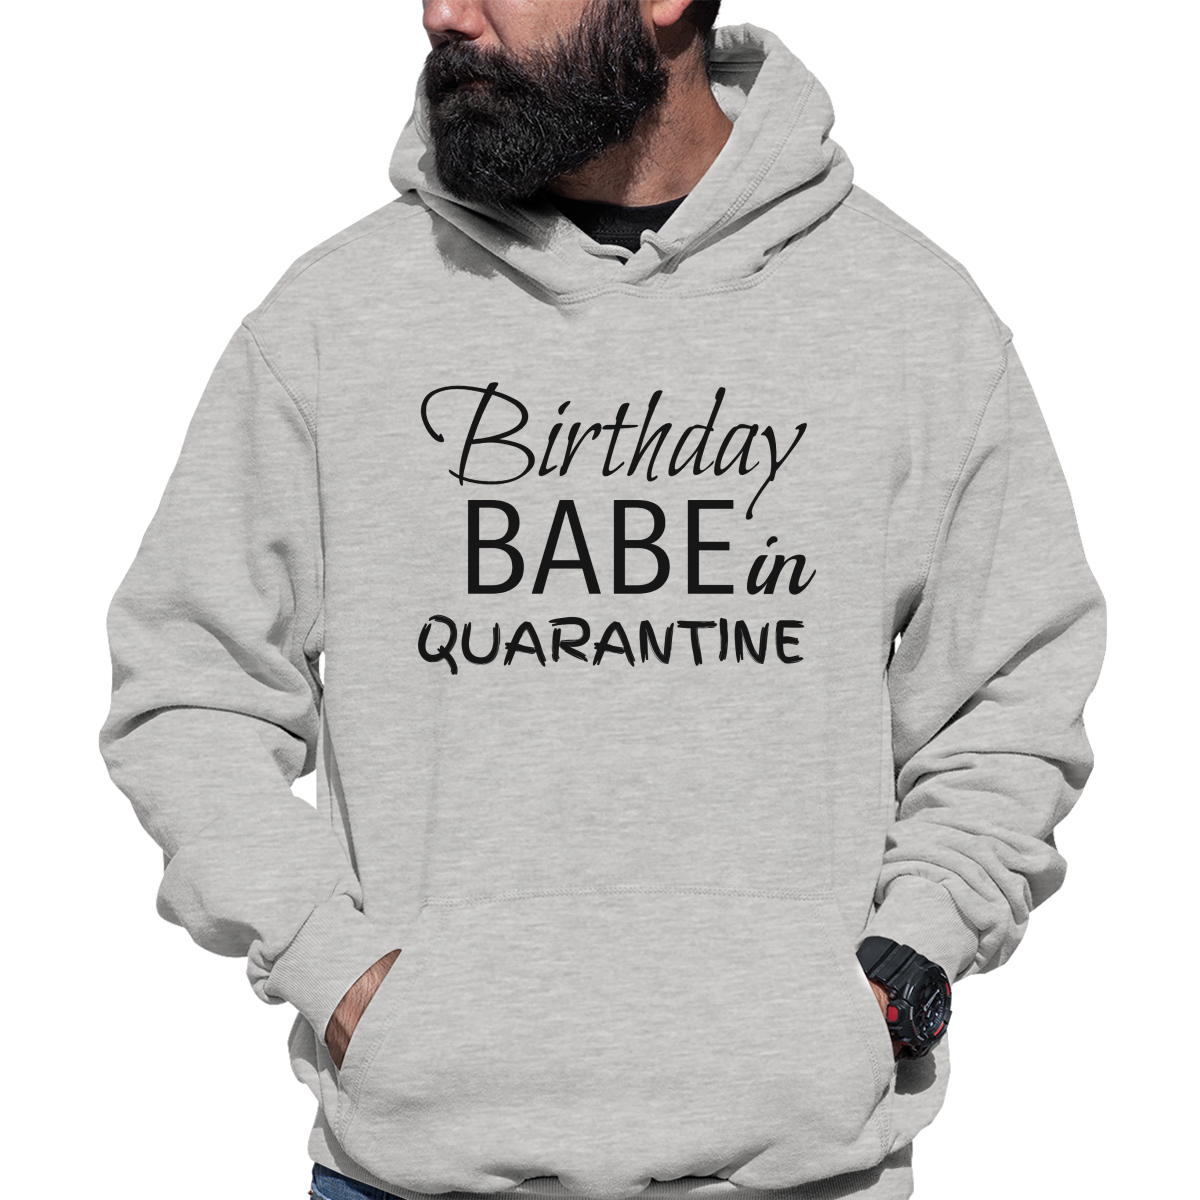 Birthday Babe in Quarantine Unisex Hoodie | Gray